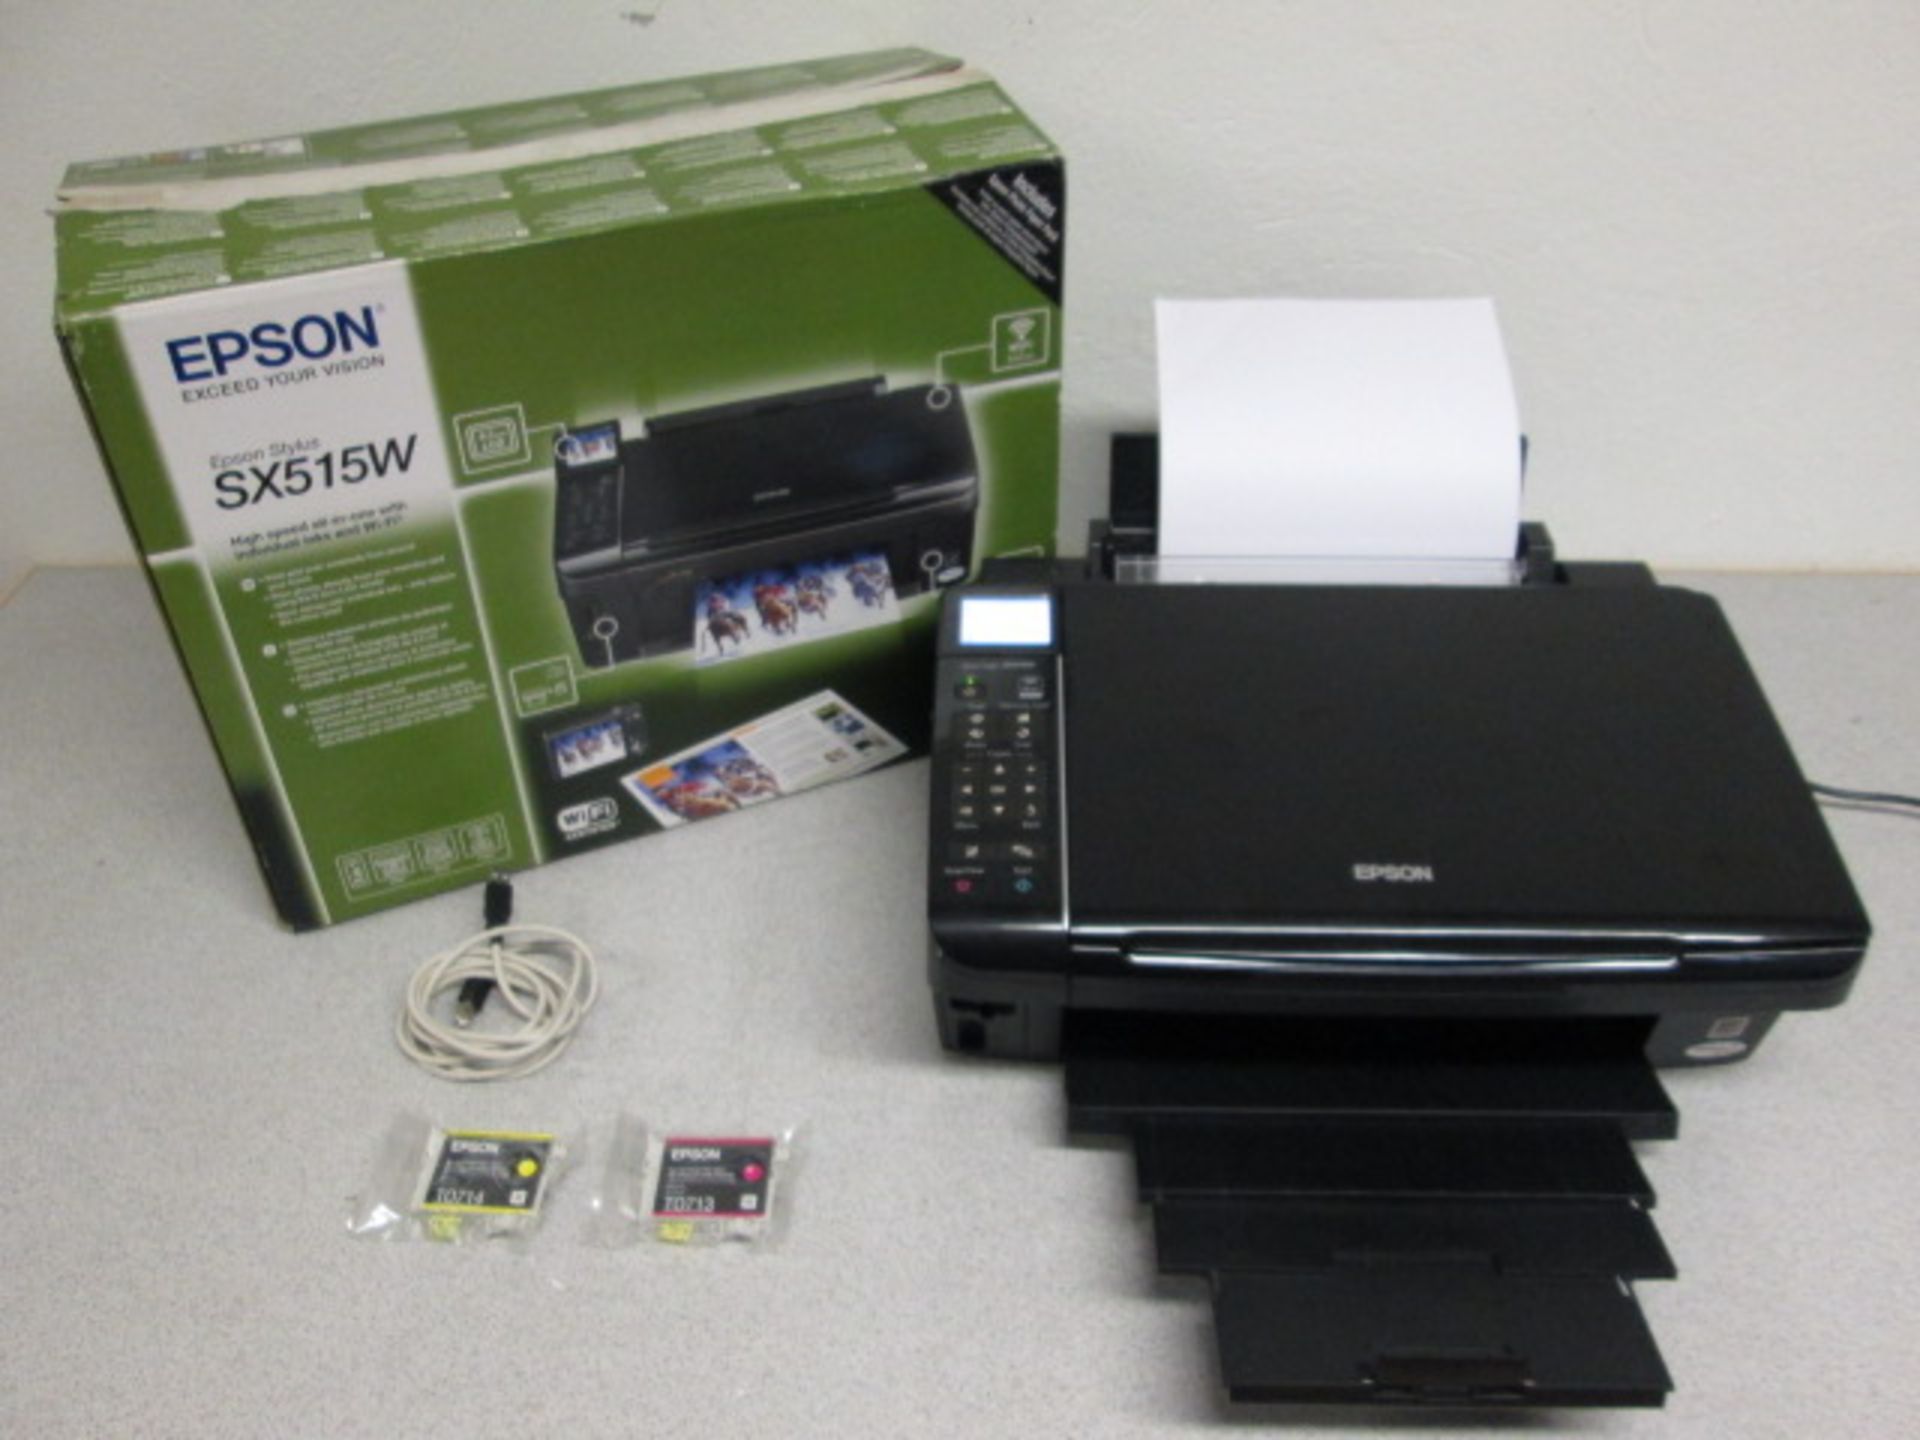 Epson Stylus SX515W, All in One Printer.